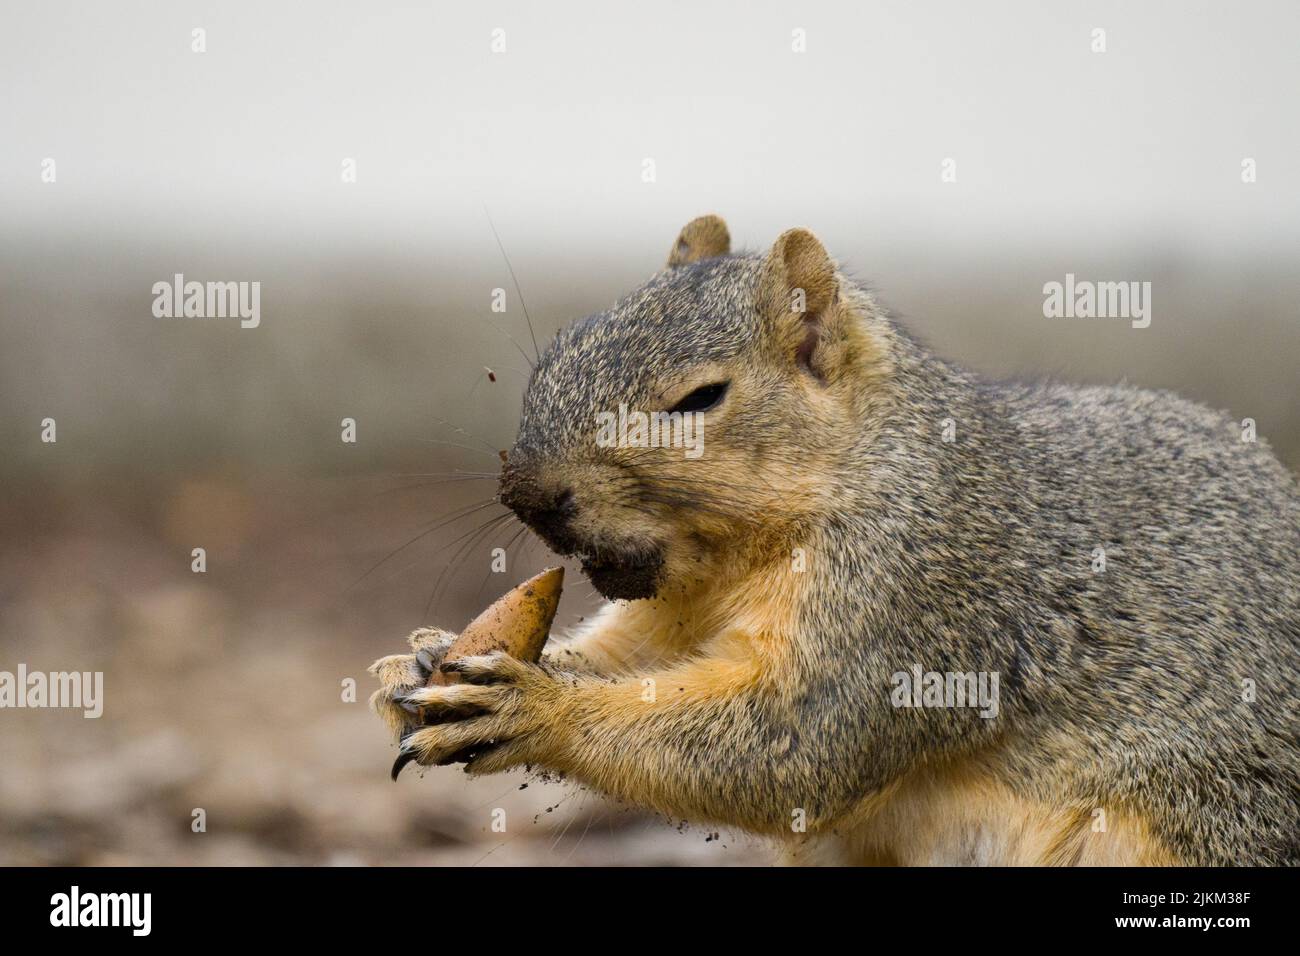 A closeup shot of a squirrel Stock Photo